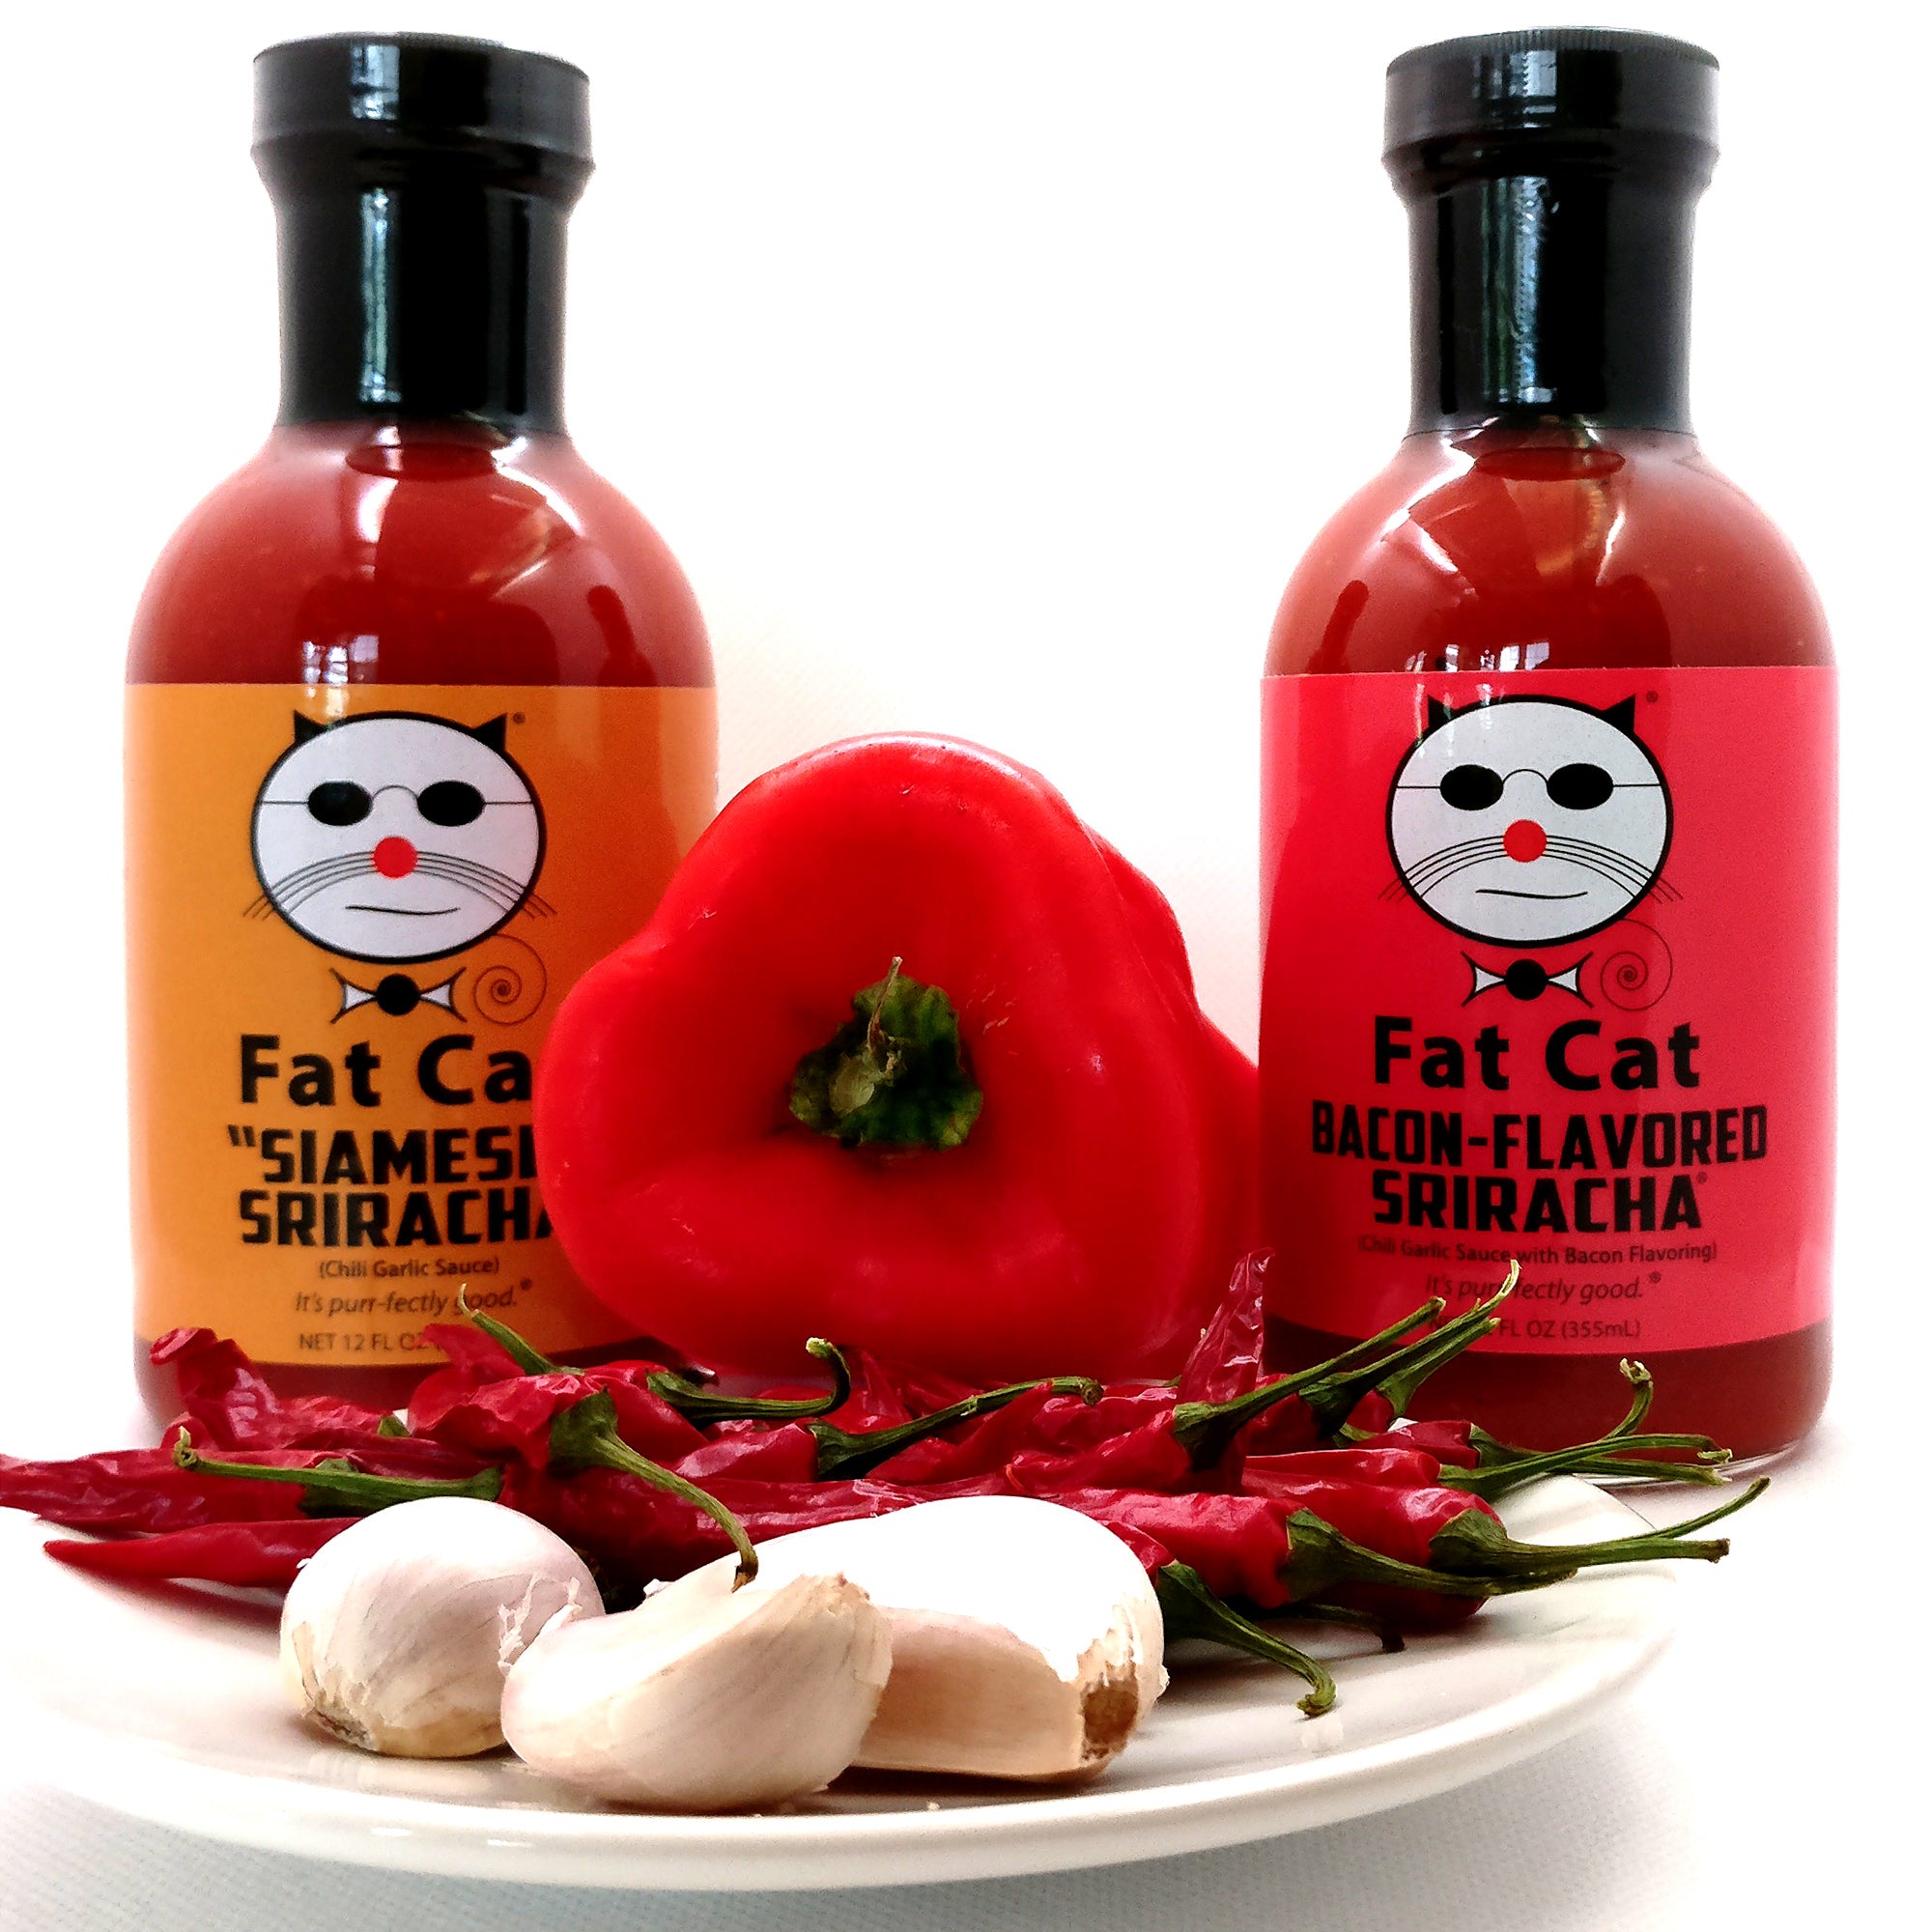 Fat-Cat-Gourmet-Siamese-Sriracha-Bacon-Flavored-Sriracha-Two-Pack-Ingredients